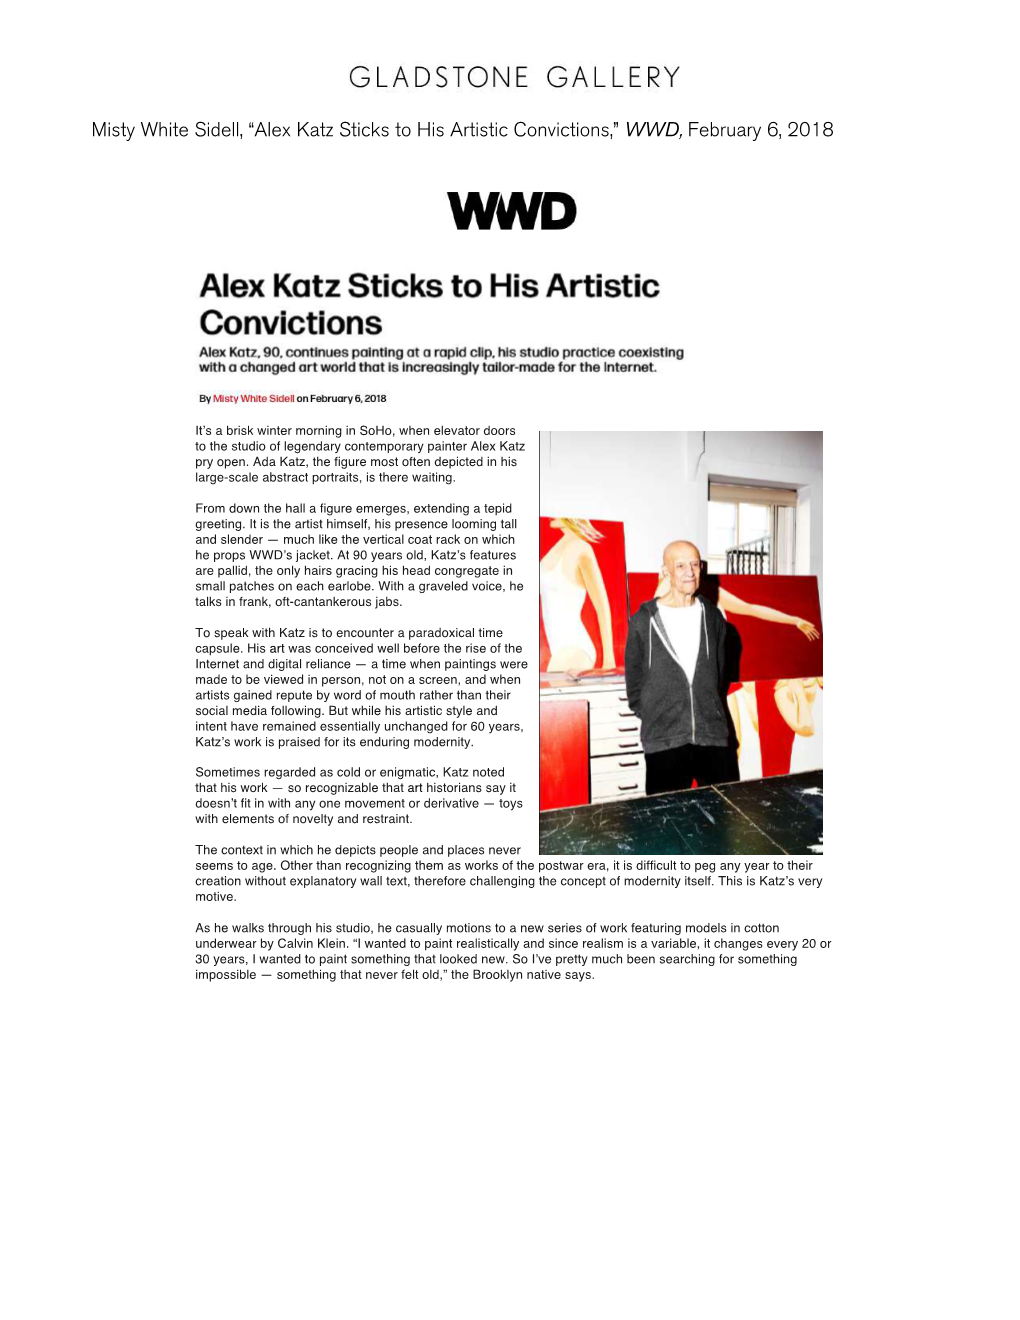 “Alex Katz Sticks to His Artistic Convictions,” WWD, February 6, 2018